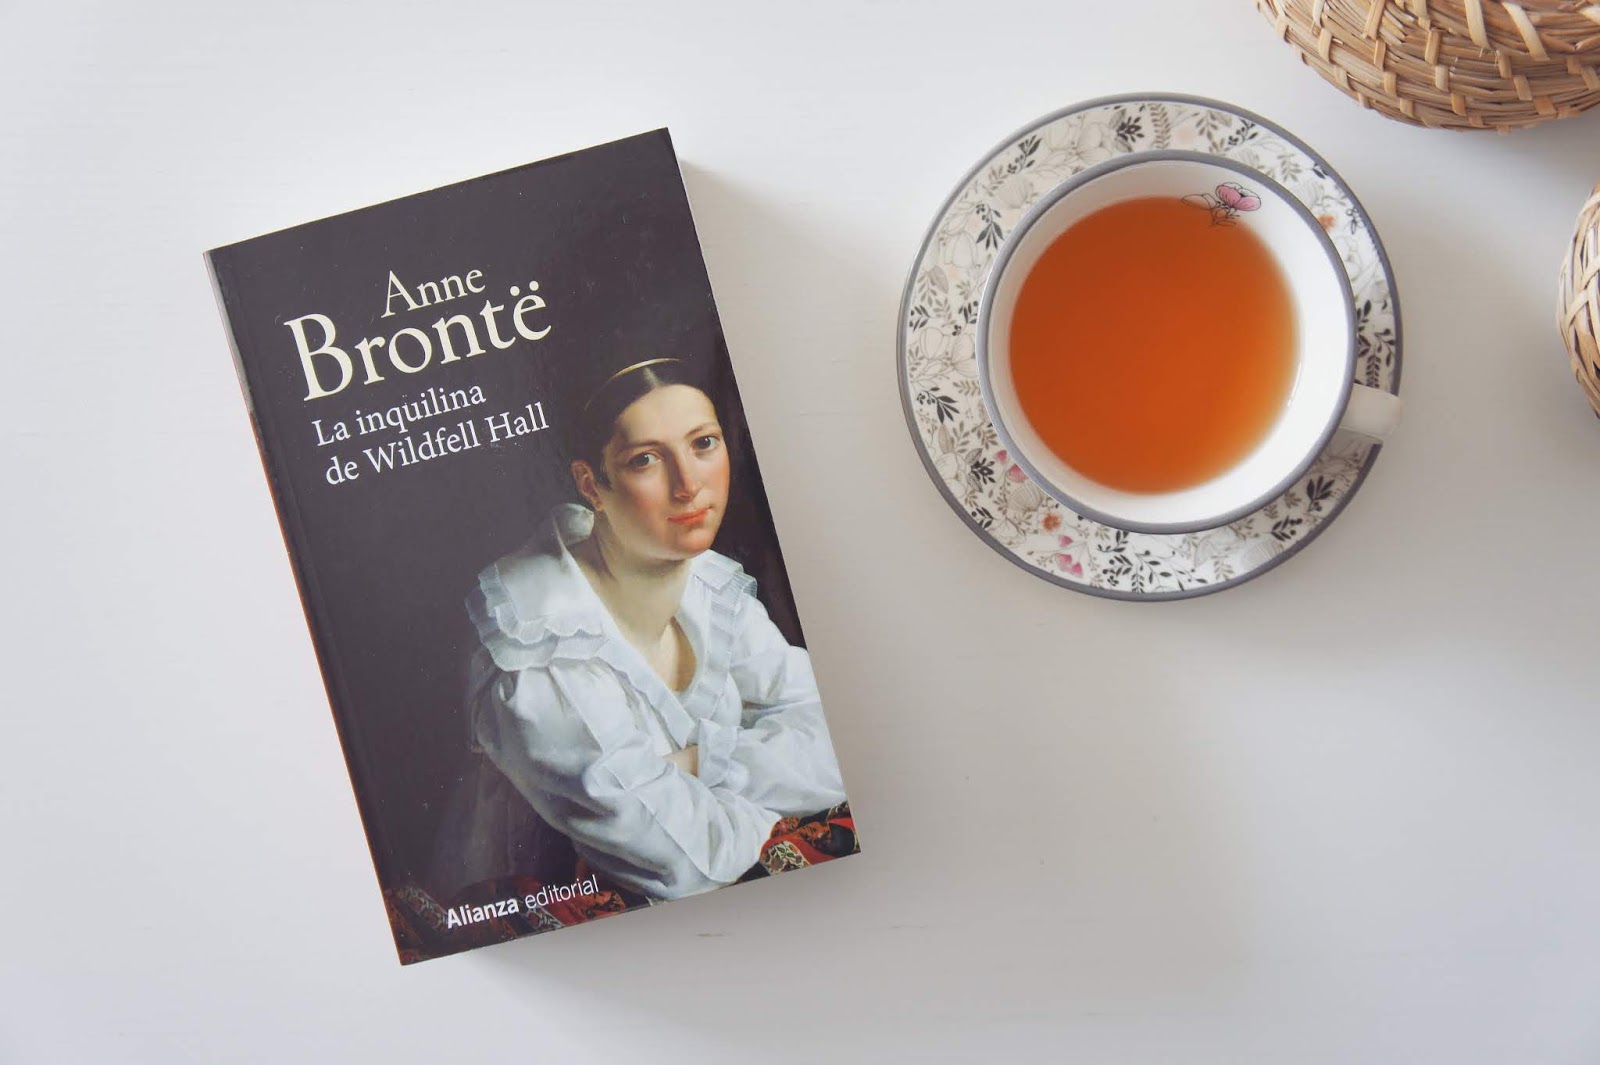  A inquilina de Wildfell Hall: 9786556401140: Anne Brontë: Libros